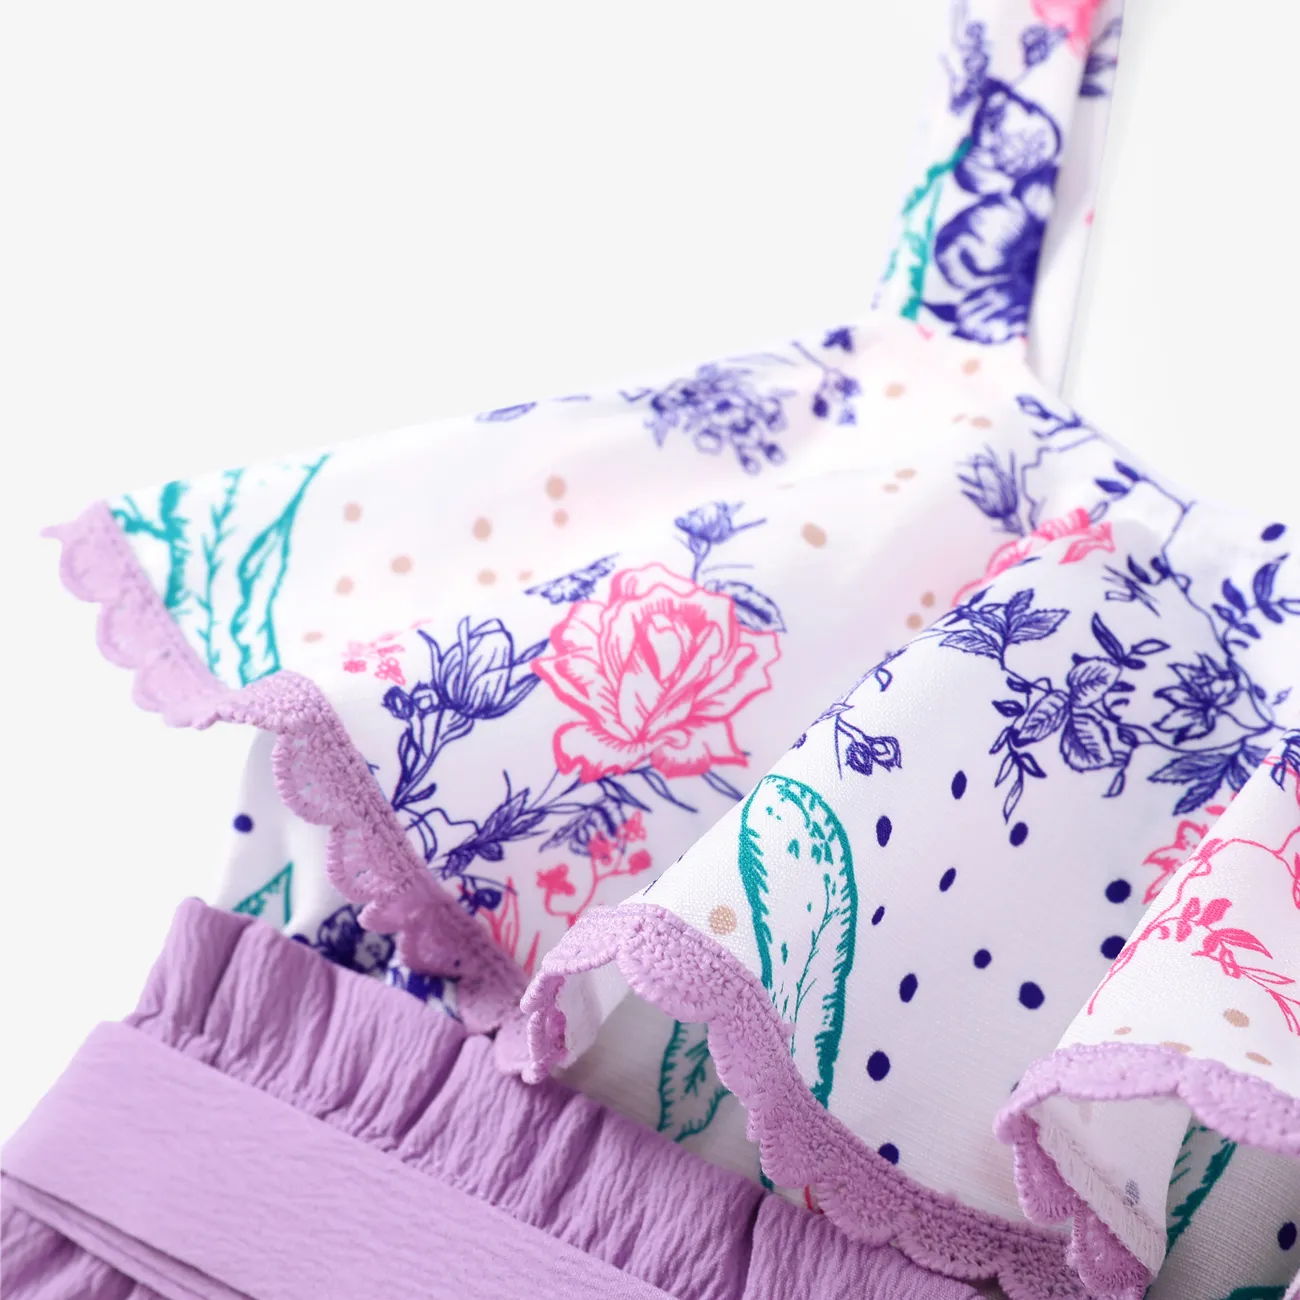 Toddler Girl Floral Print Ruffled Cami Jumpsuit Purple big image 1